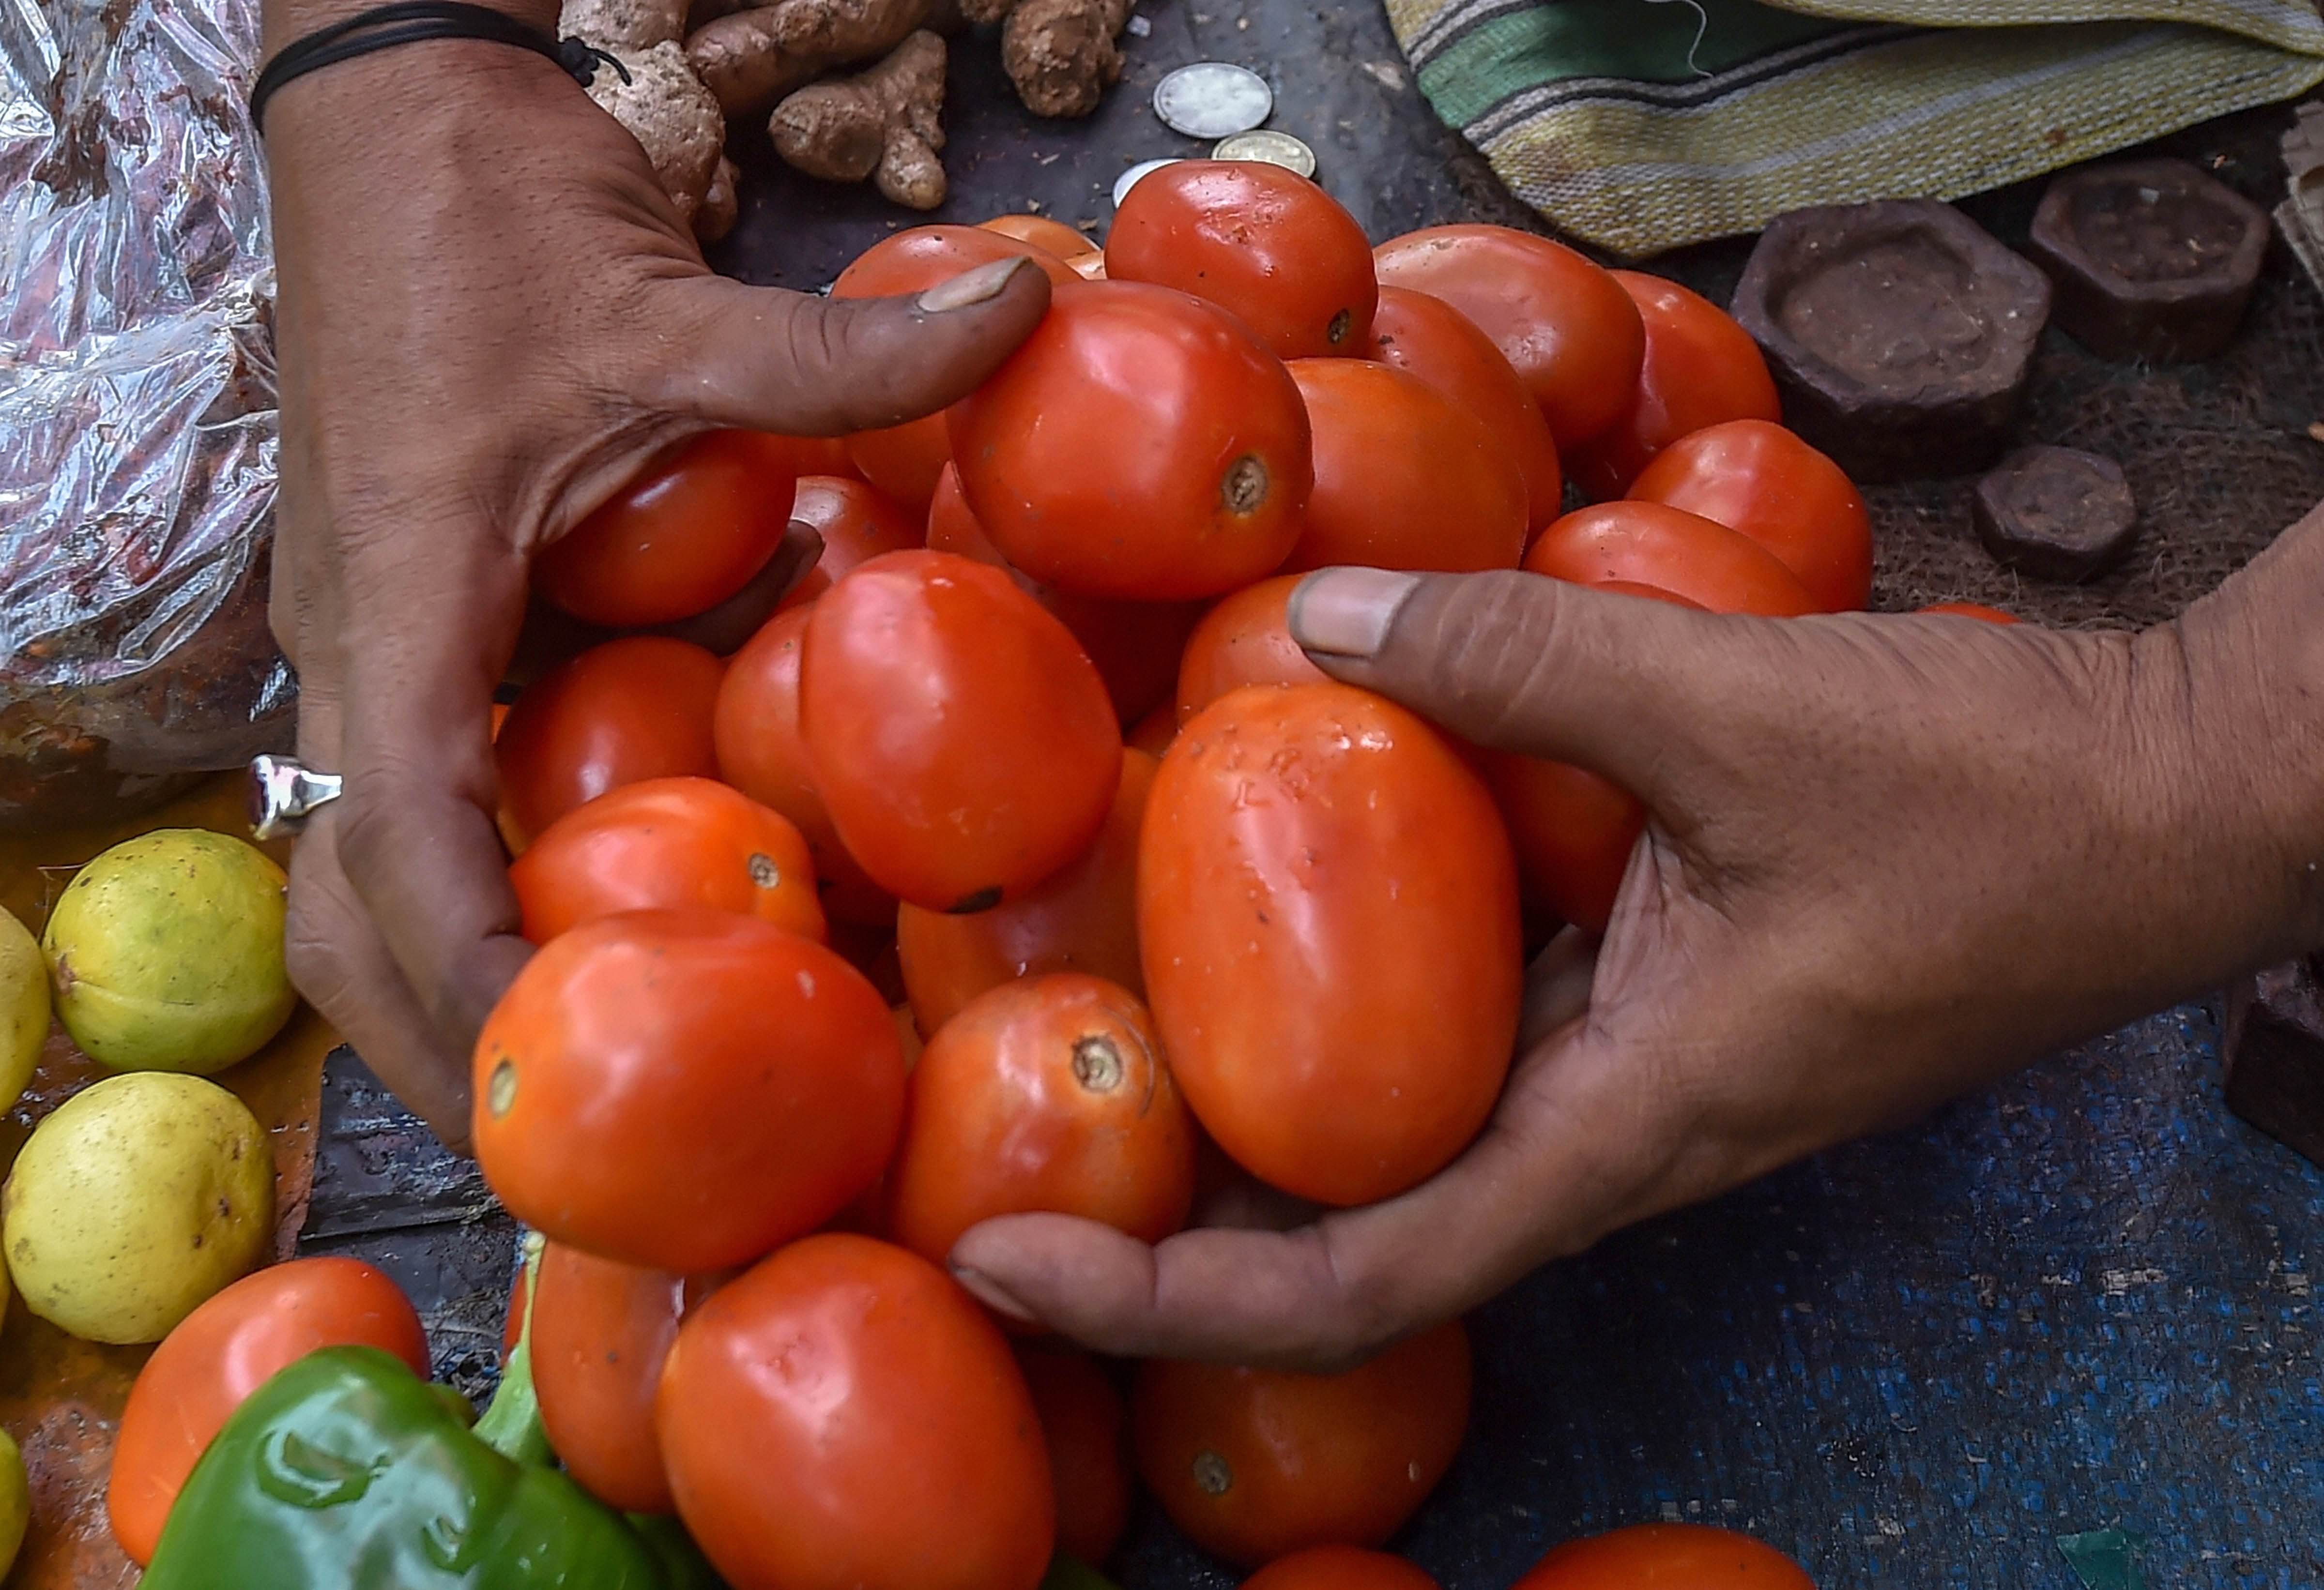 A vegetable vendor sorts tomatoes for a customer at a market. Credits: PTI Photo